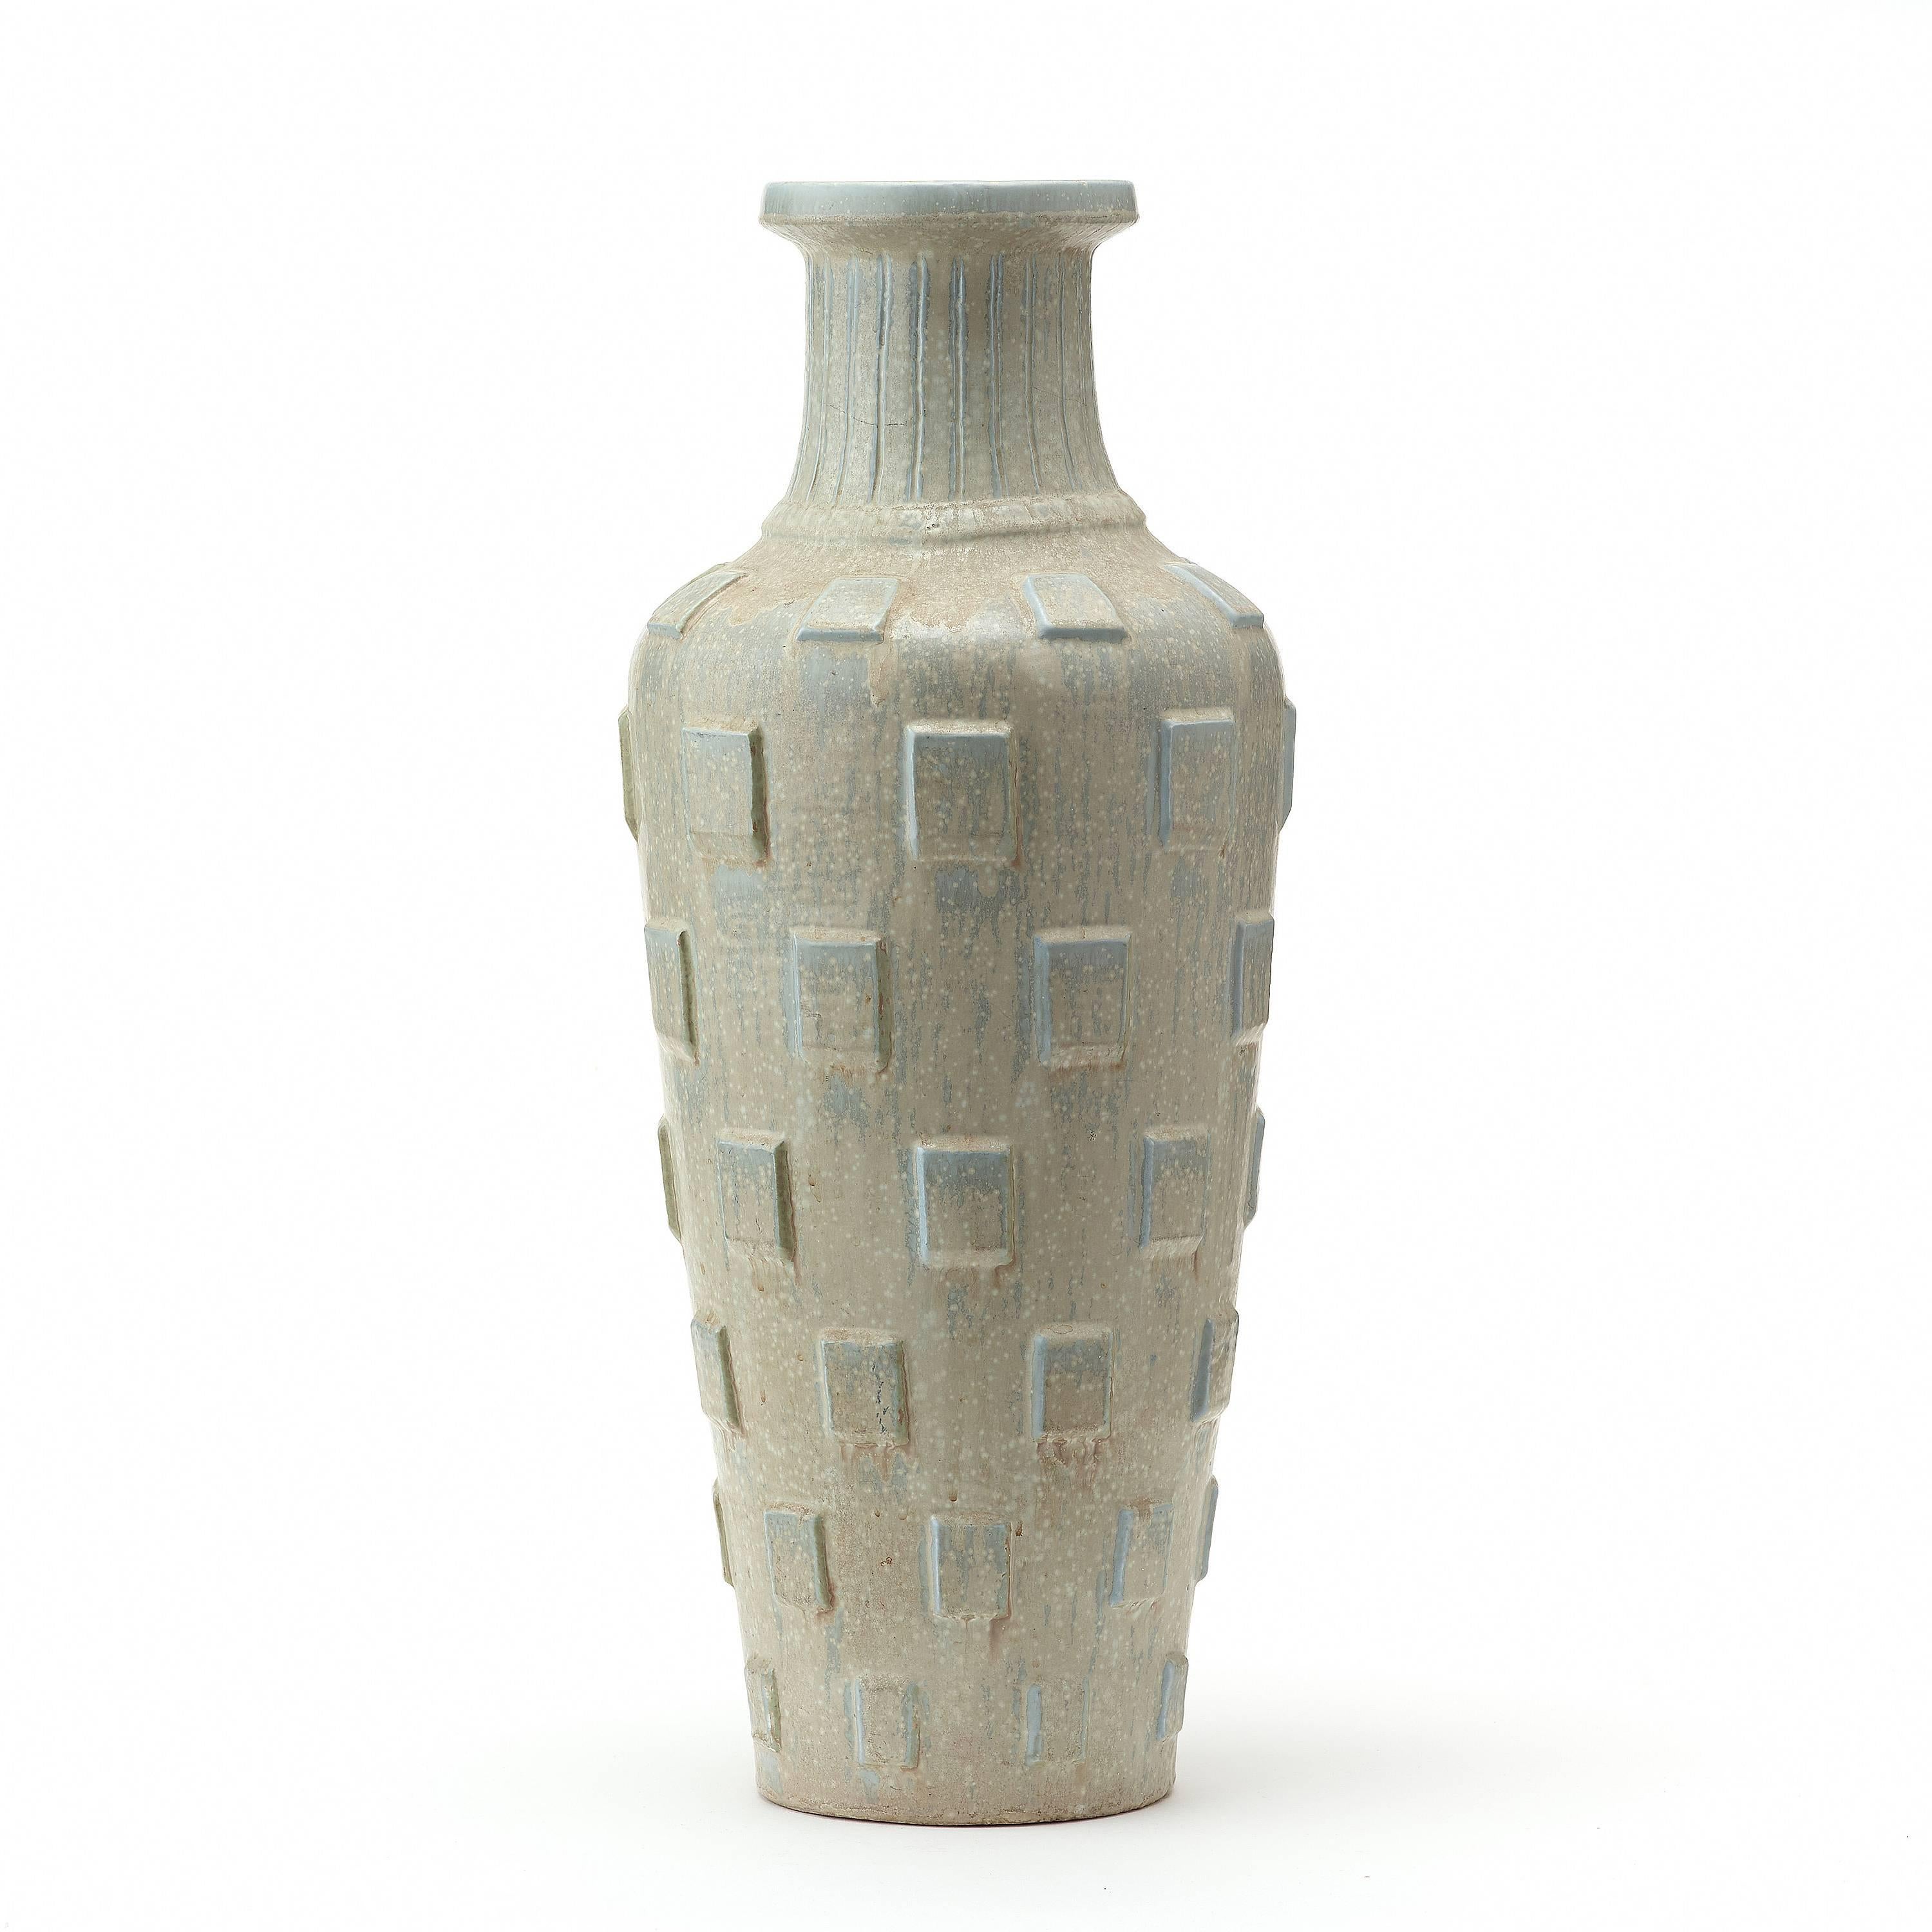 Floor vase by Gunnar Nylund for Rörstrand, Sweden.
Glazed stone ware.